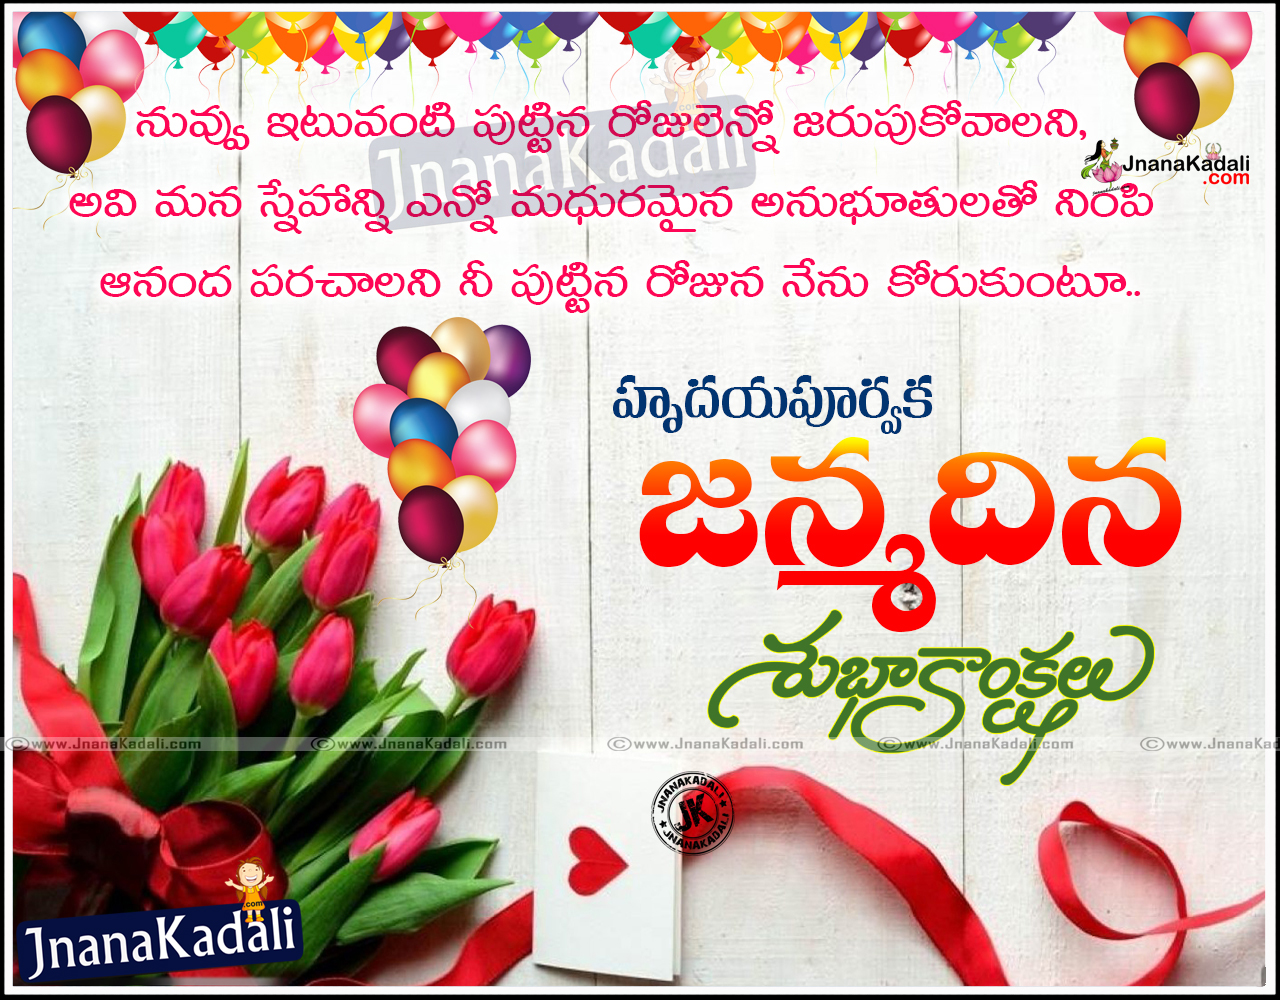 Top Inspiring Telugu Birthday Quotations Online | JNANA KADALI.COM ...